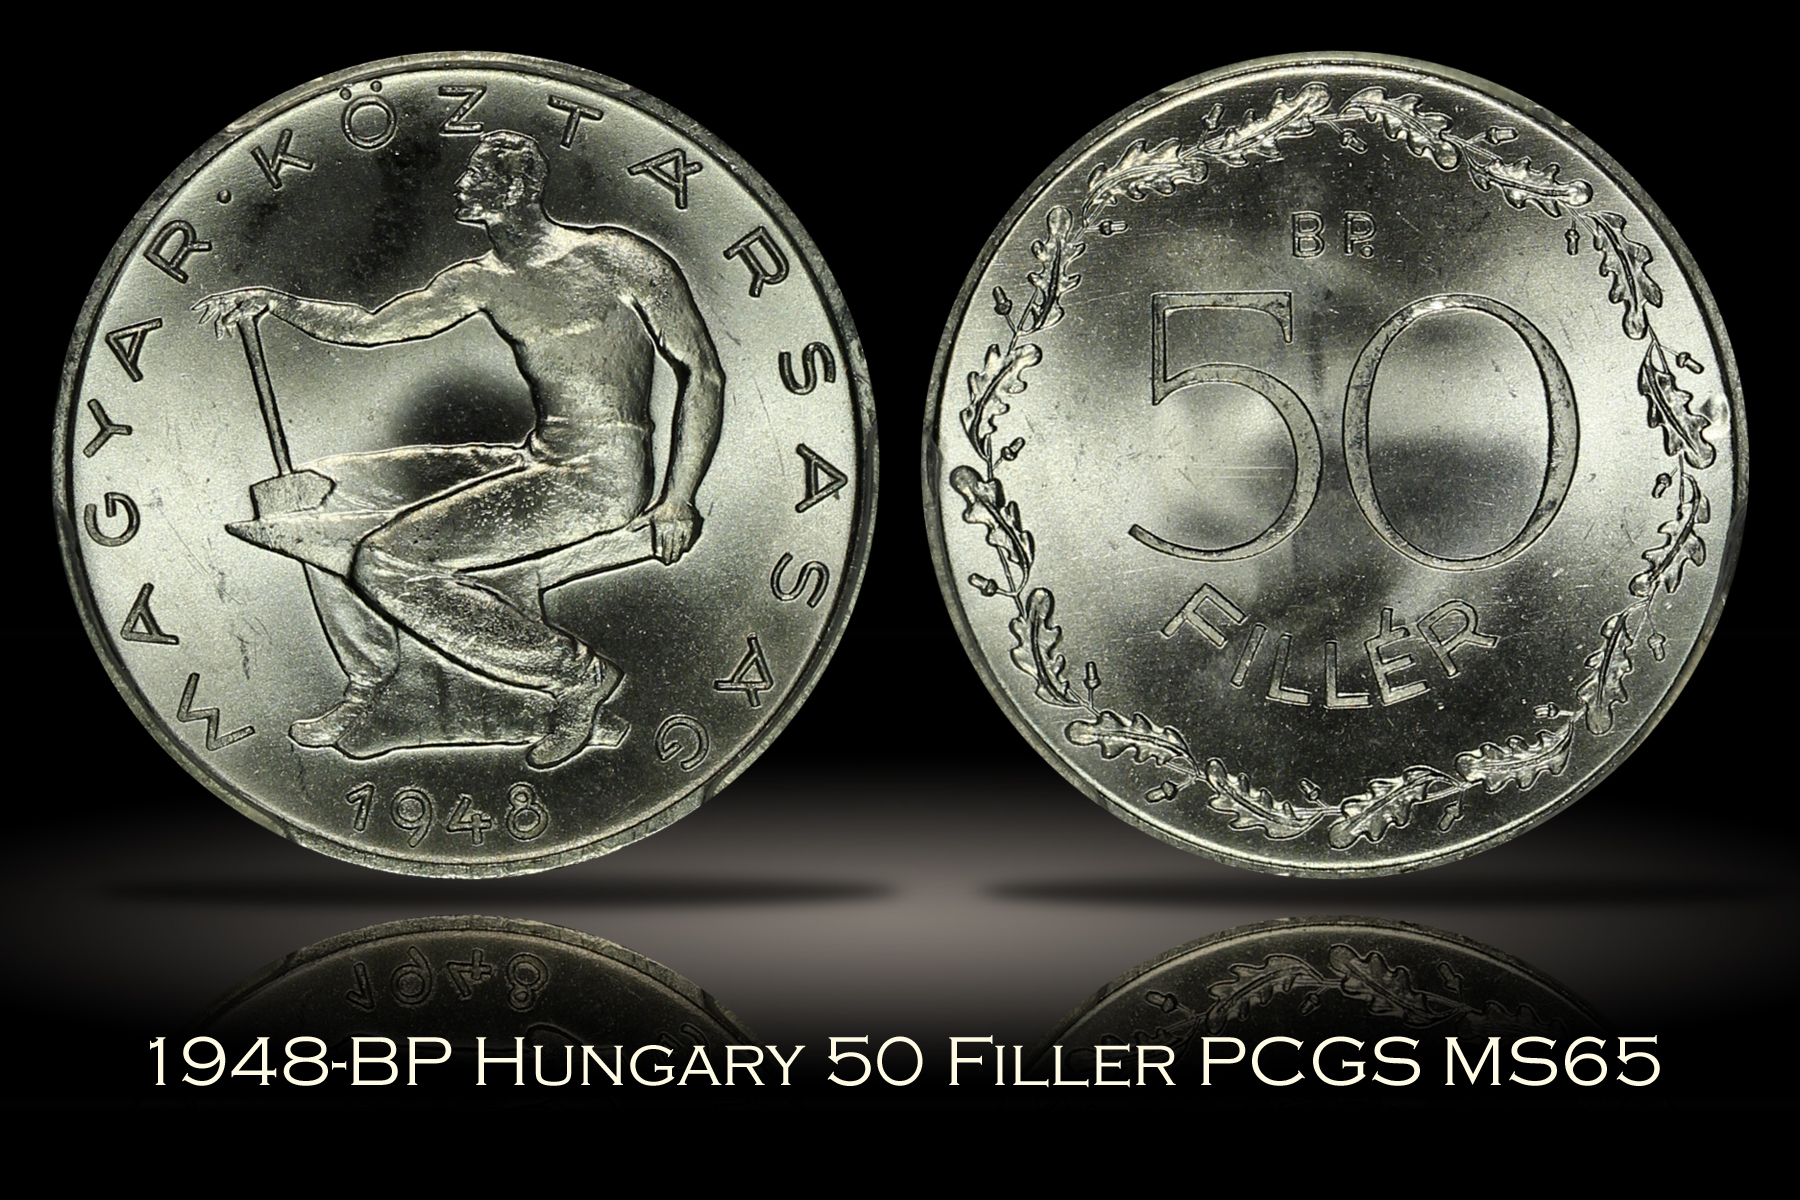 1948-BP Hungary 50 Filler PCGS MS65